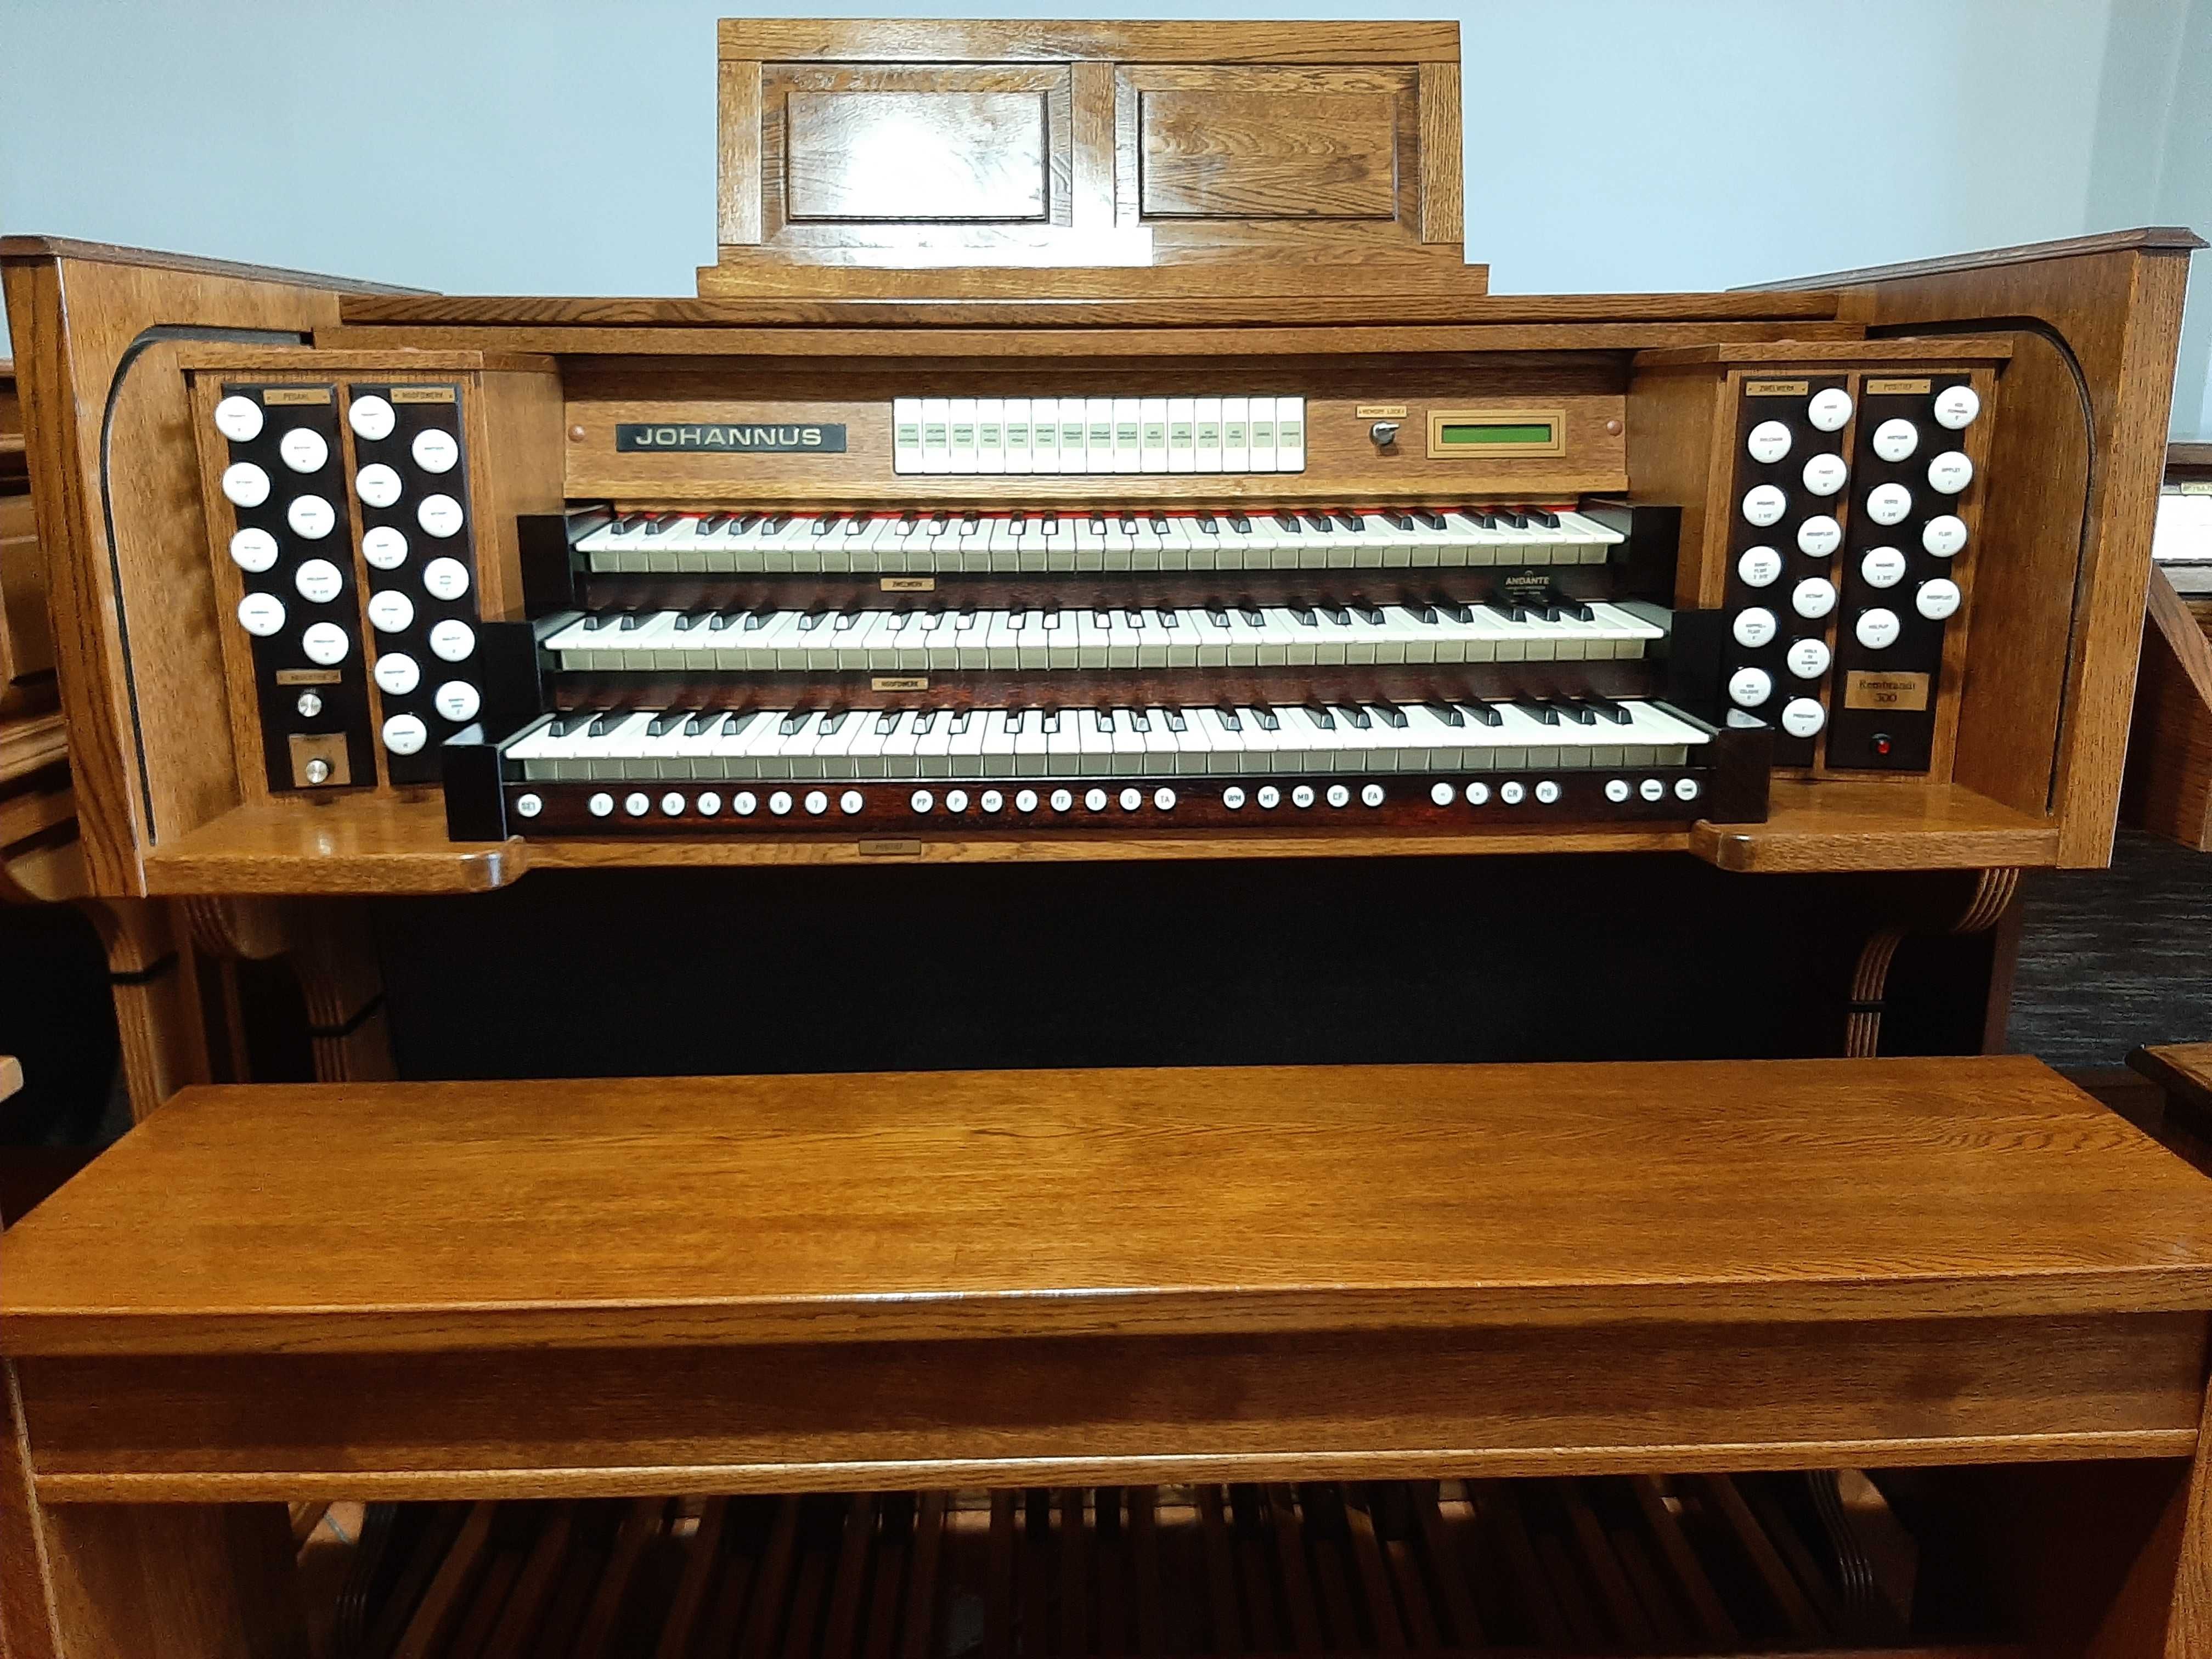 Cyfrowe organy koscielne Johannus Rembrandt 300 Intonat 4.0